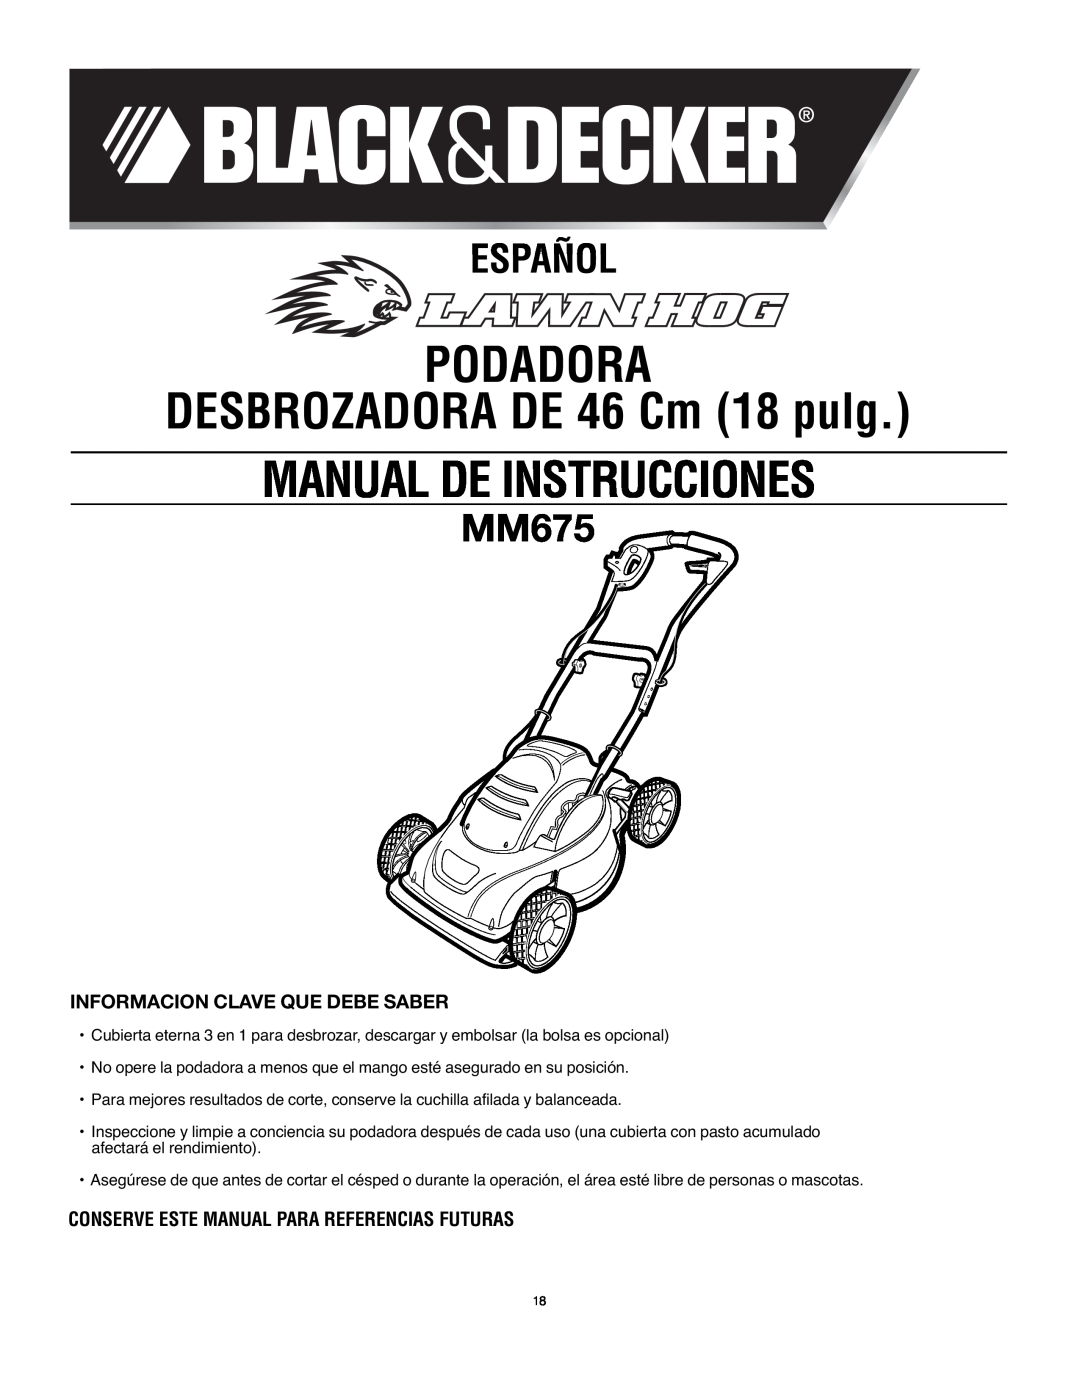 Black & Decker MM675 instruction manual PODADORA DESBROZADORA DE 46 Cm 18 pulg MANUAL DE INSTRUCCIONES, Español 